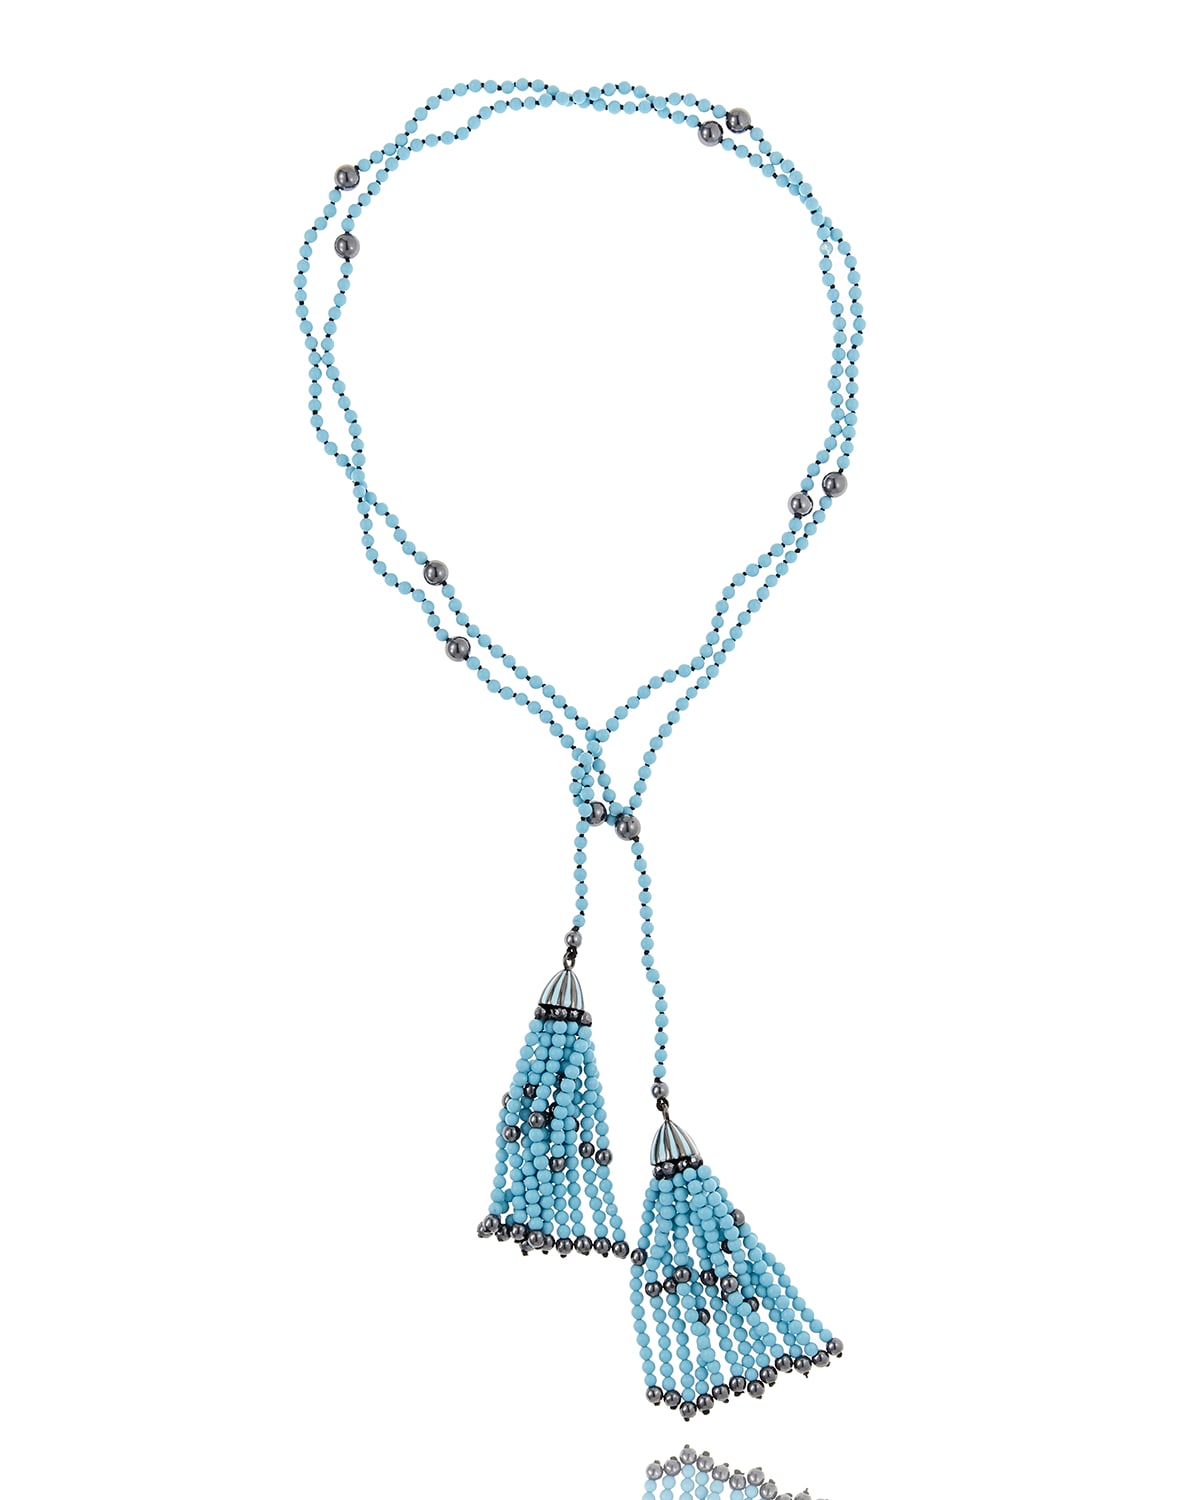 M.c.l By Matthew Campbell Laurenza Turquoise & Hematite Tassel Wrap Necklace